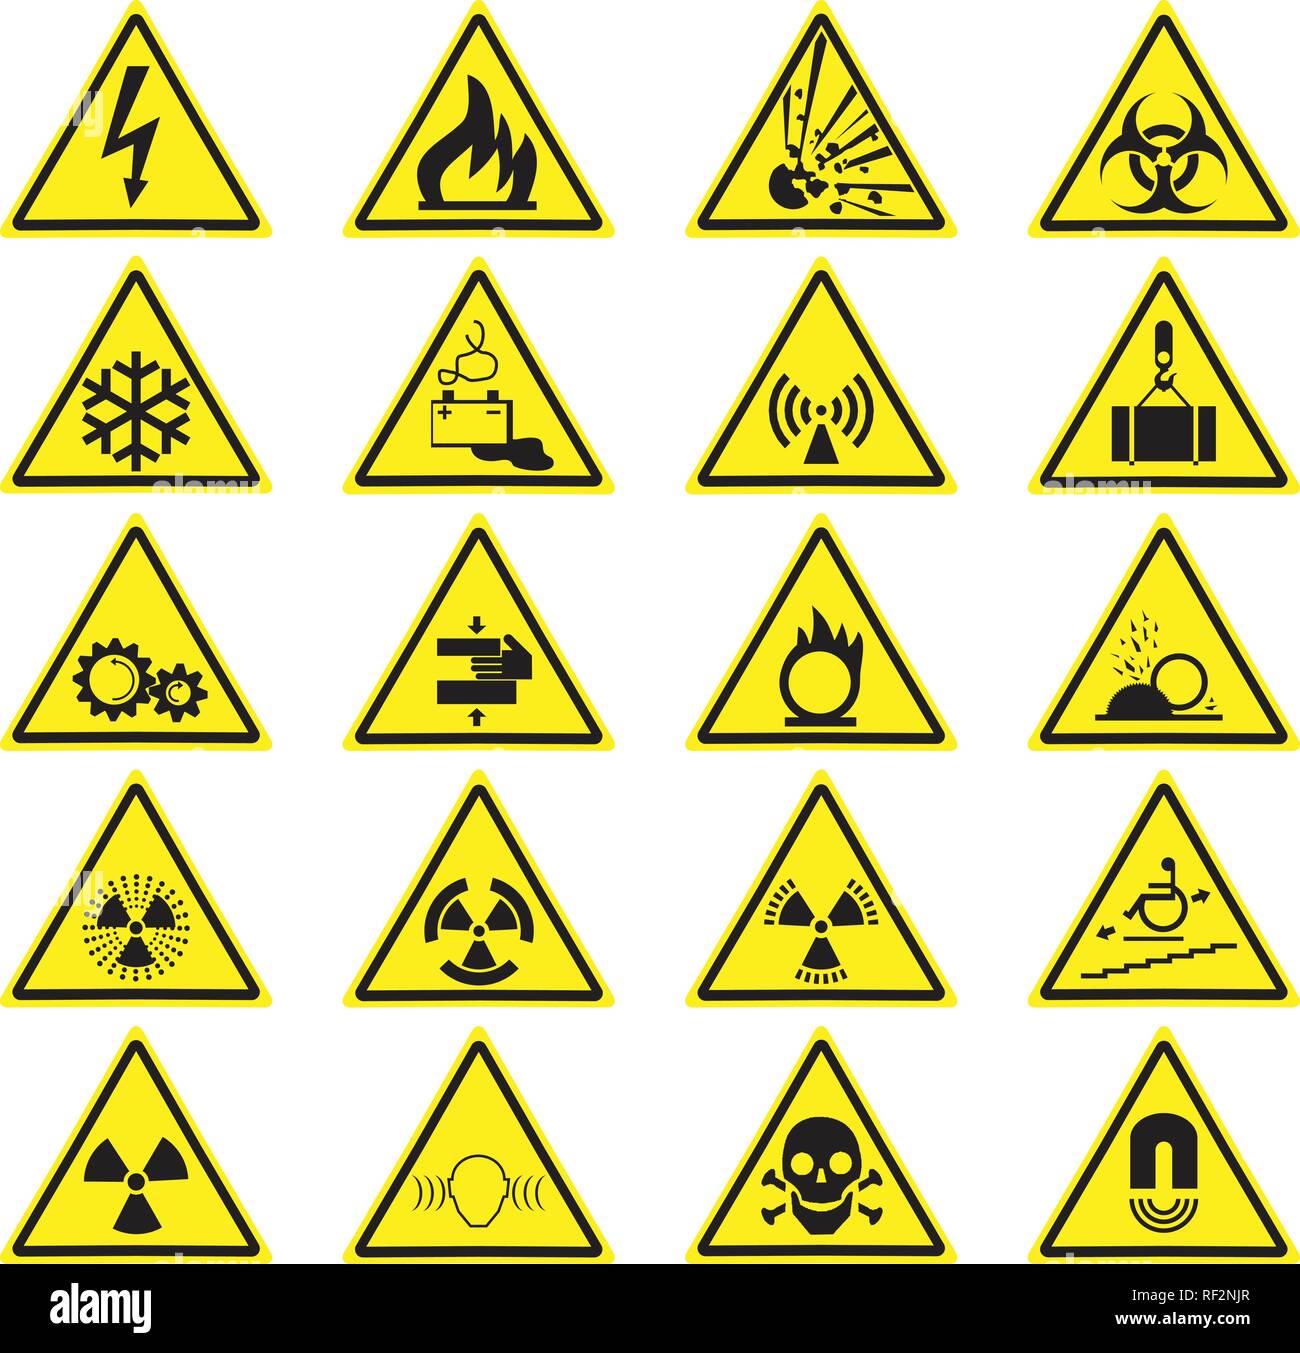 Hazard Warning Signs Symbols